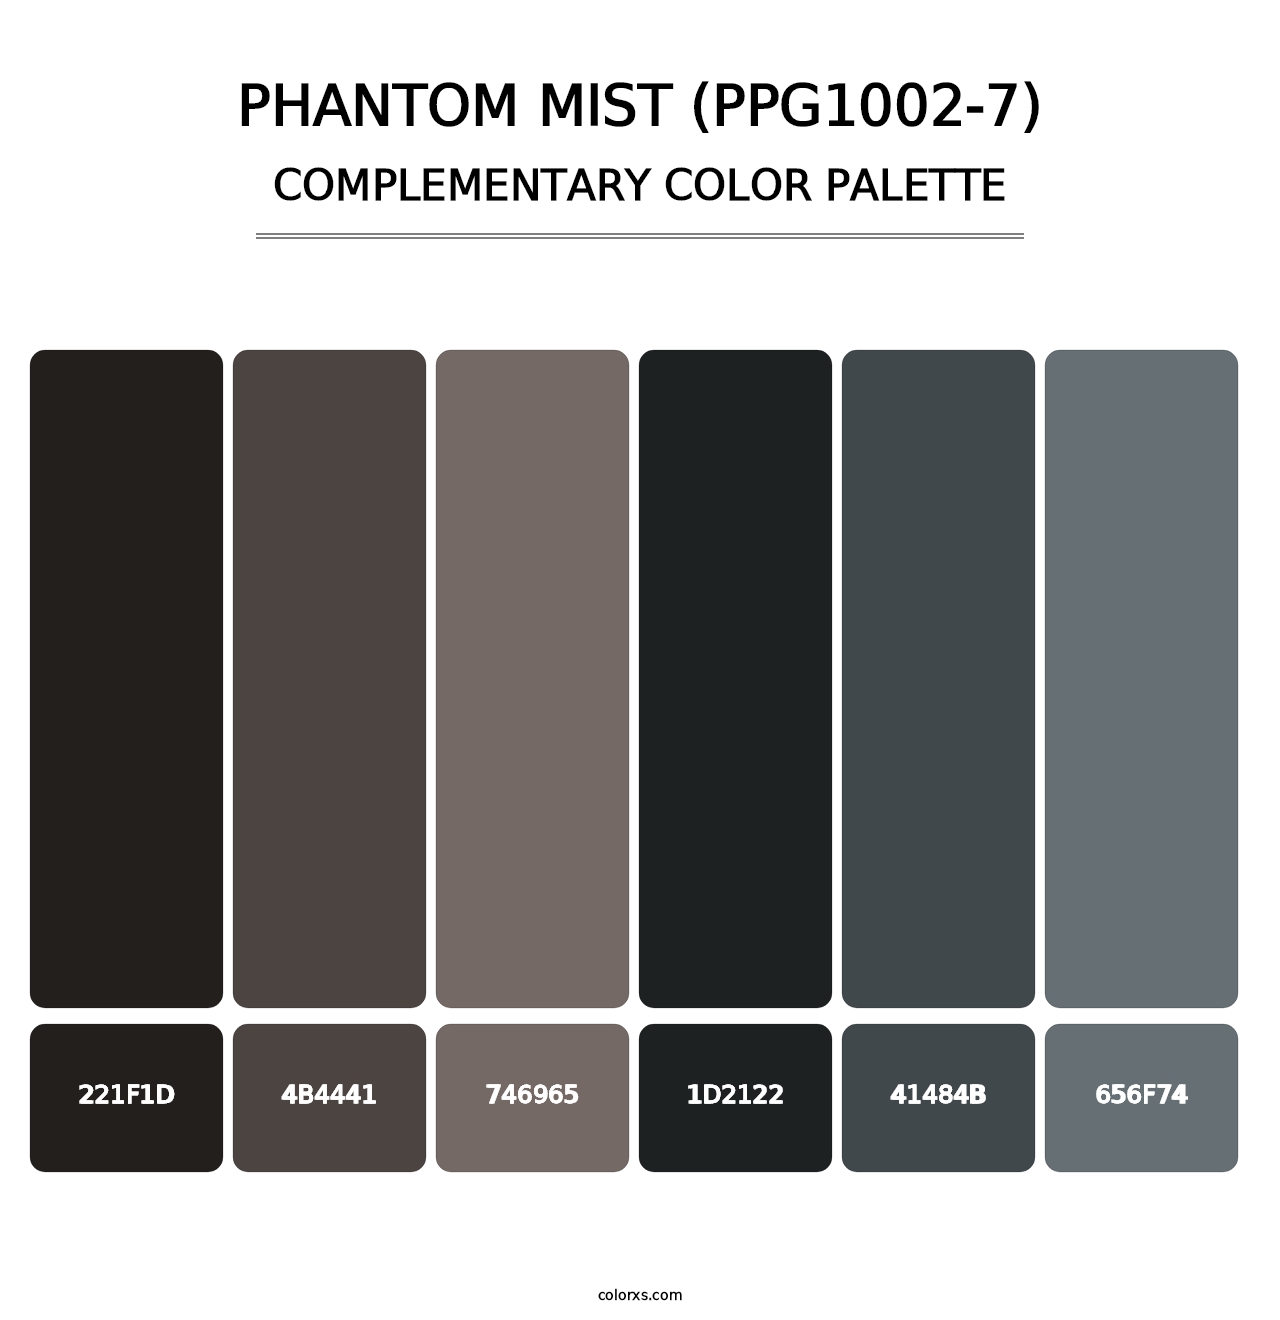 Phantom Mist (PPG1002-7) - Complementary Color Palette